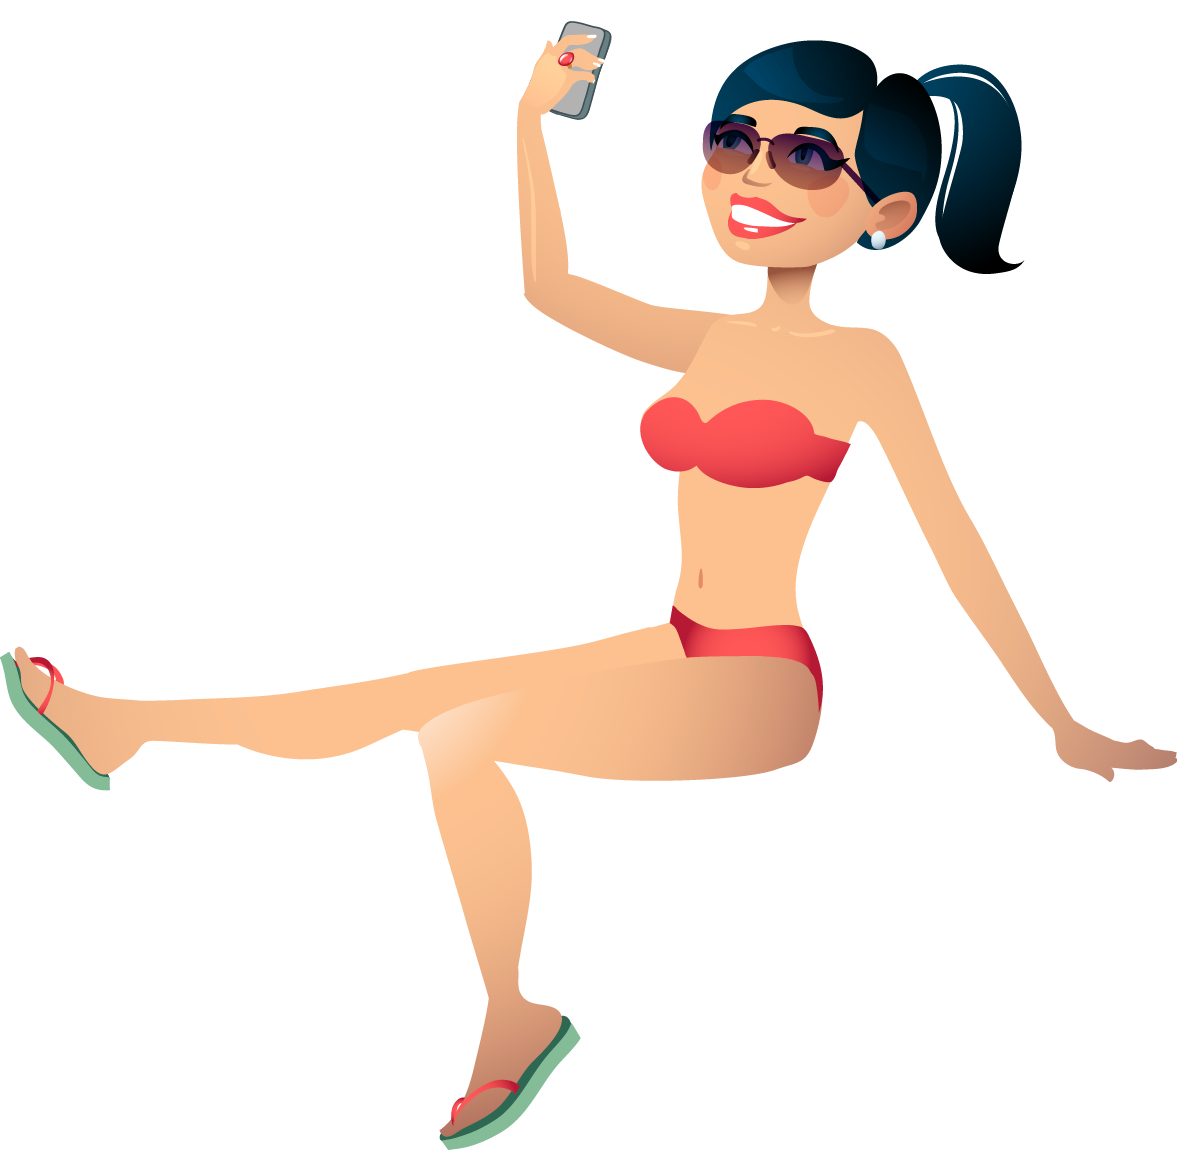 Bikini Woman Clip Art - Bikini Woman Cartoon - (1177x1150) Png Clipart Down...